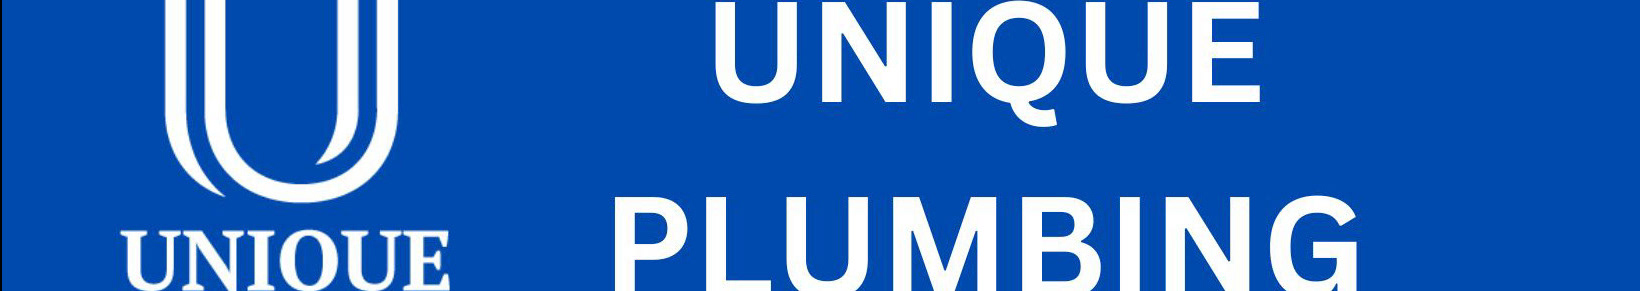 Unique Plumbing's profile banner